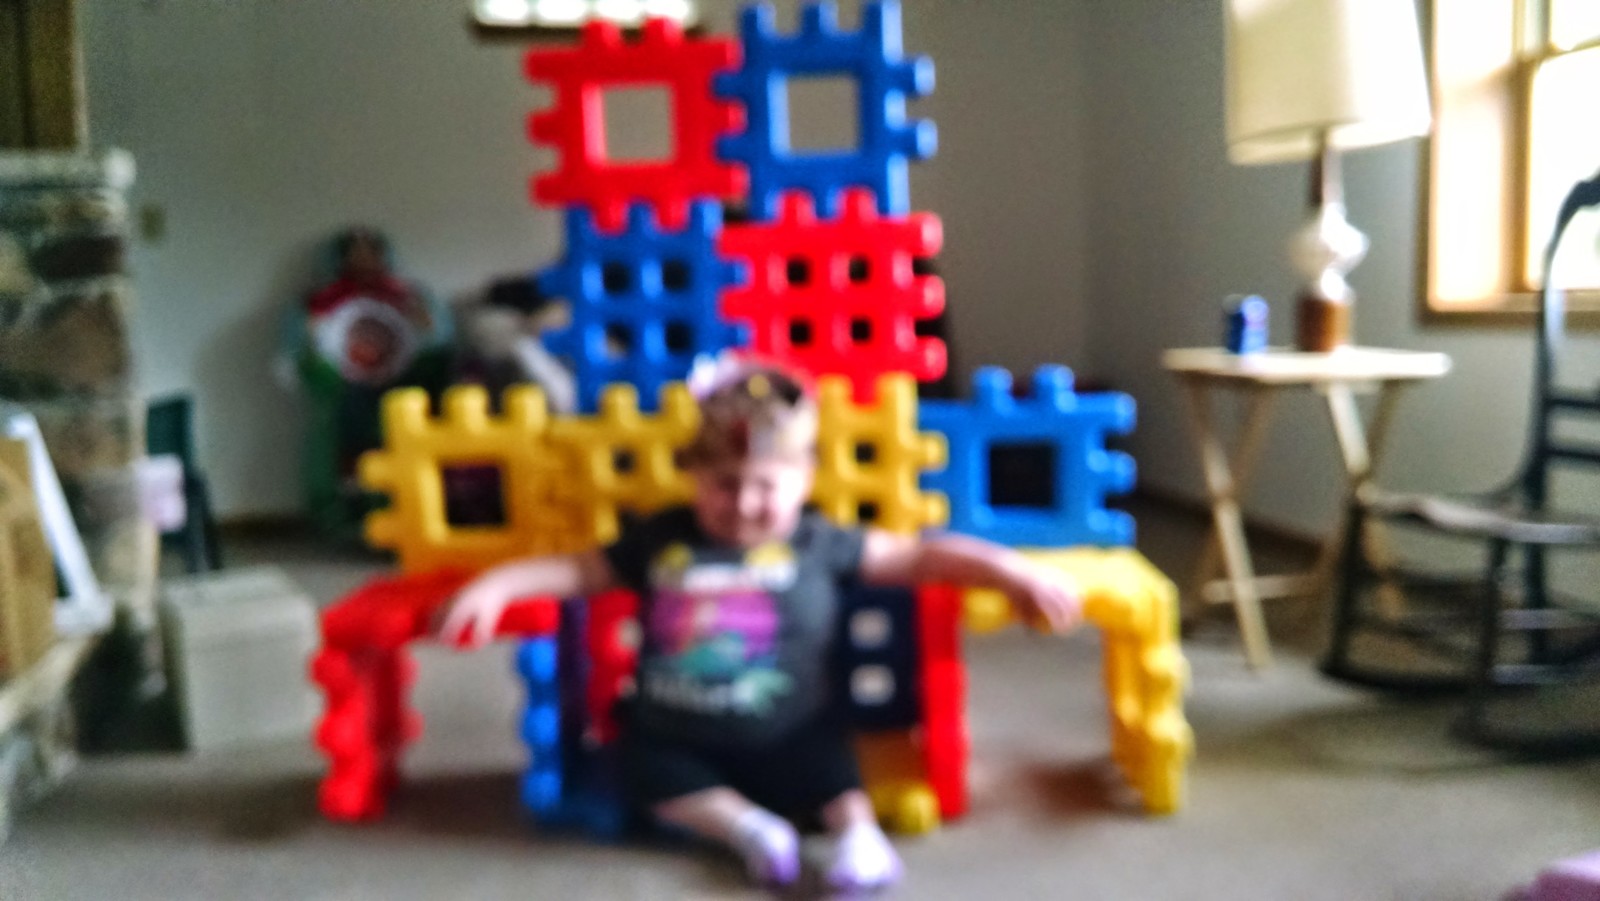 A throne of blocks